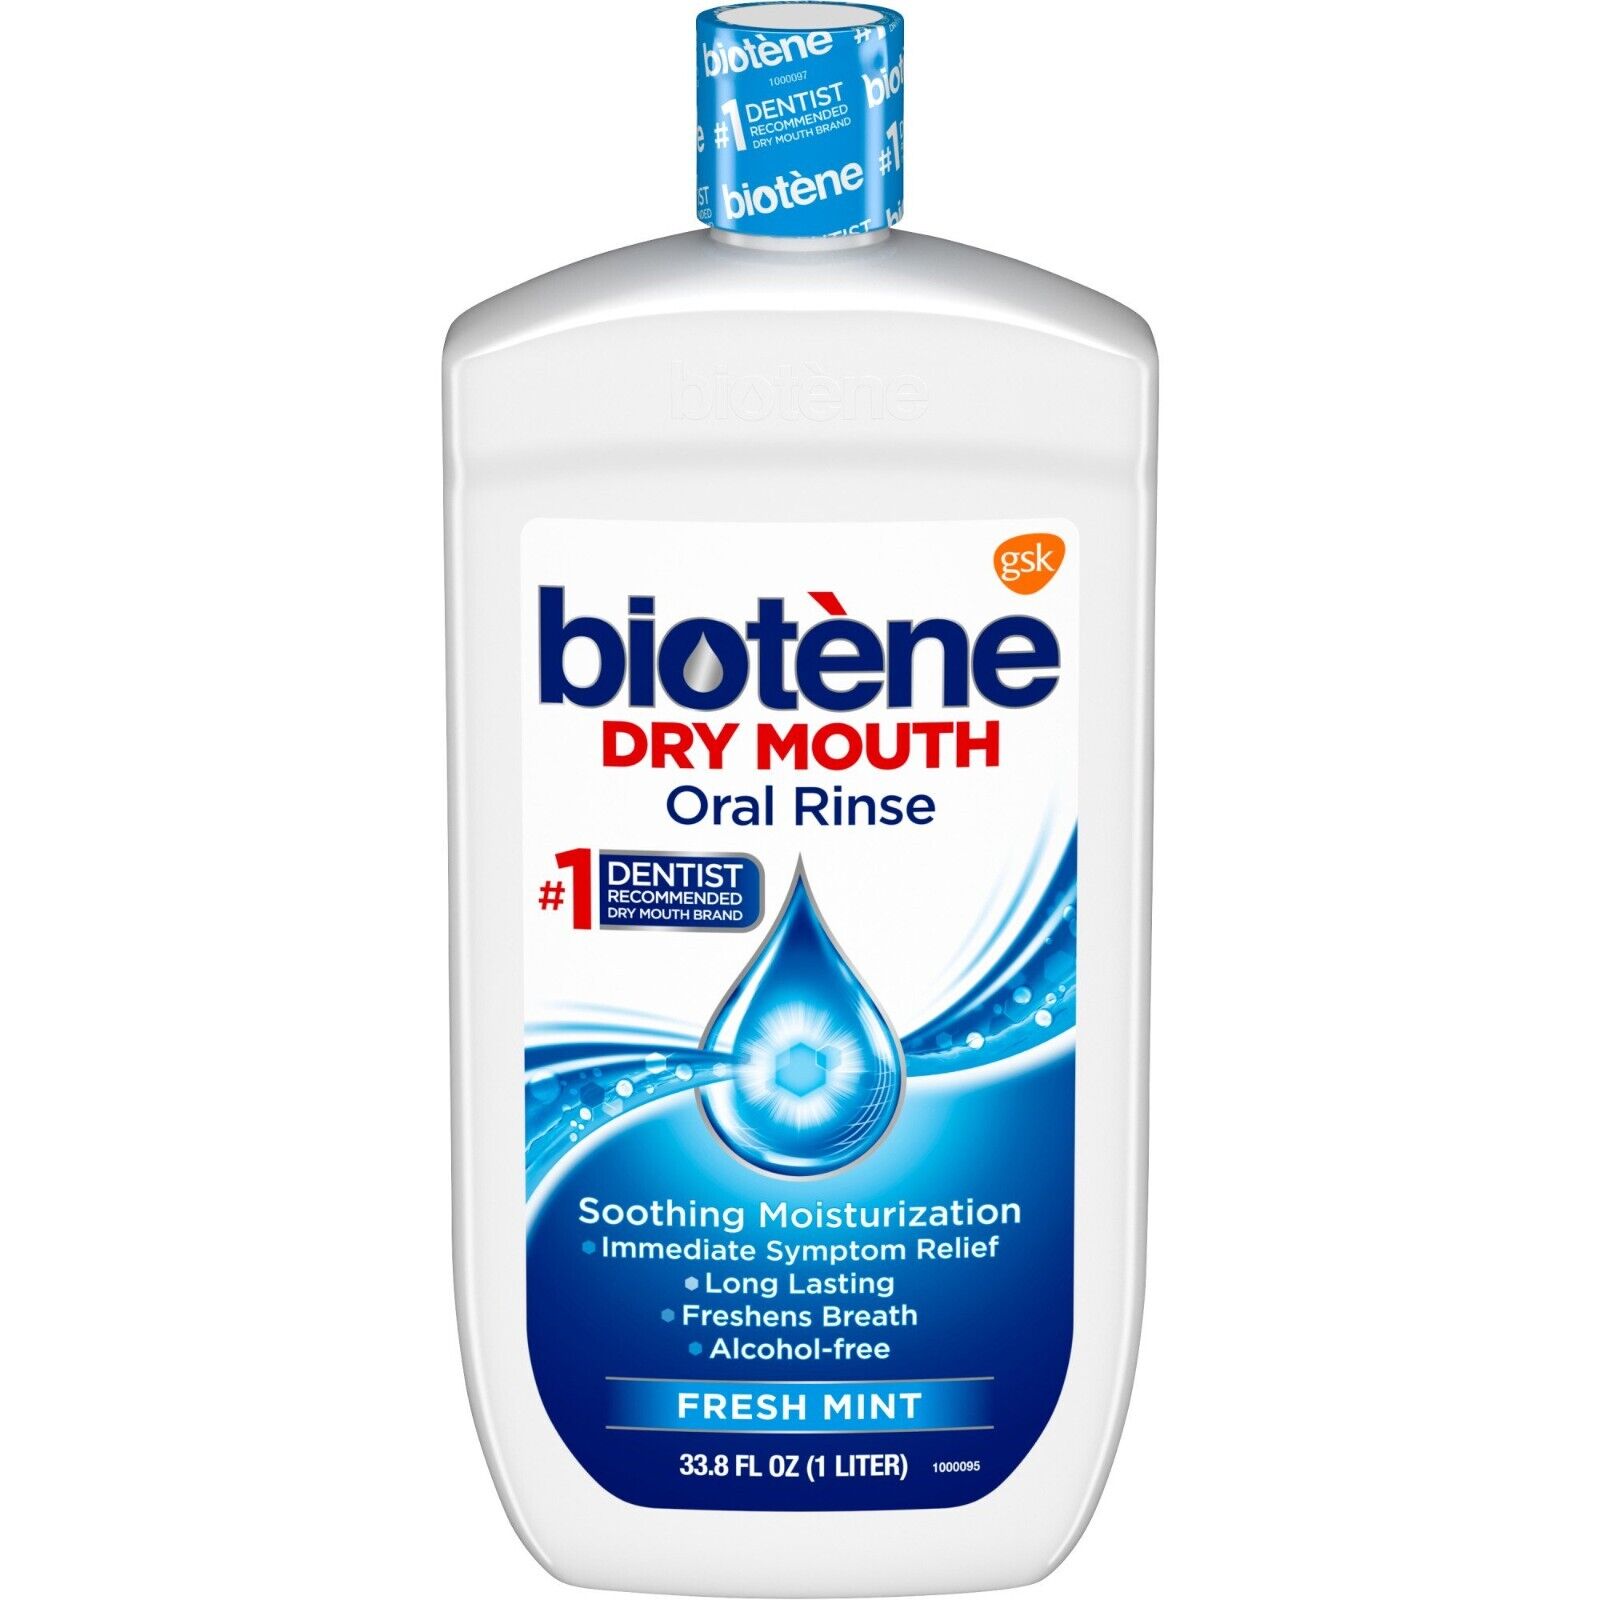 Biotene Fresh Mint Moisturizing Oral Rinse Mouthwash, For Dr